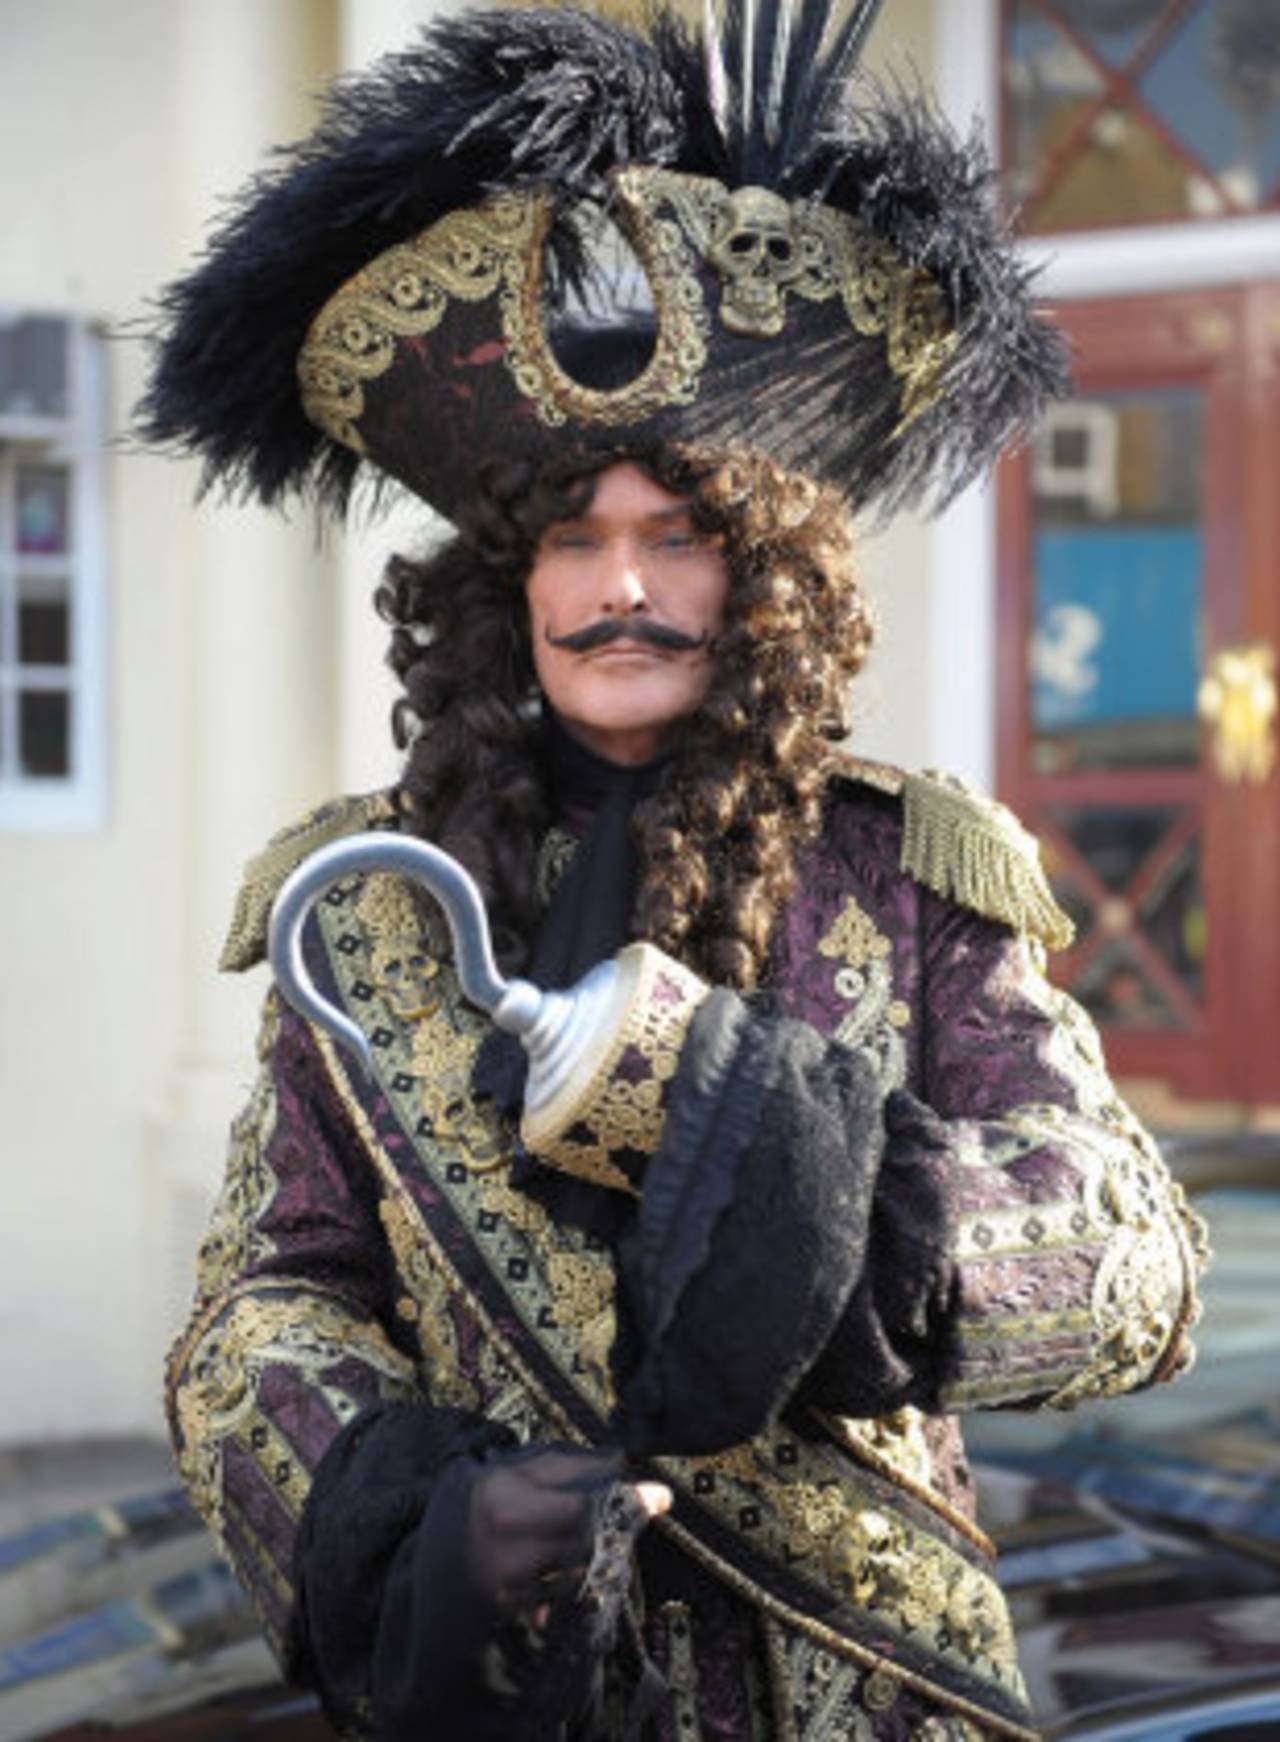 David Hasselhoff dressed as Captain Hook, London, December 9, 2010